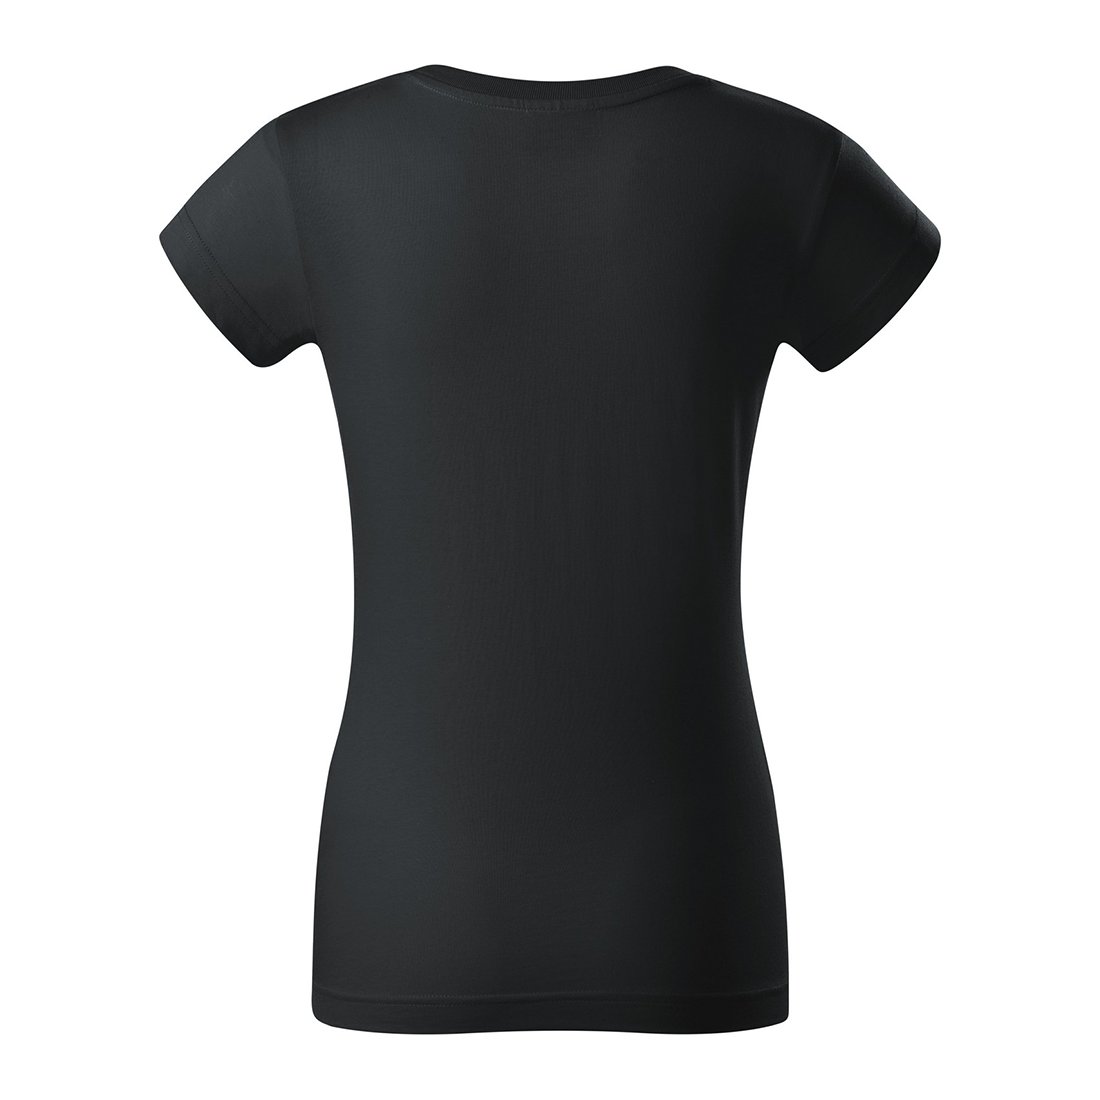 Women's Pre-shrunk Cotton T-shirt - Safetywear